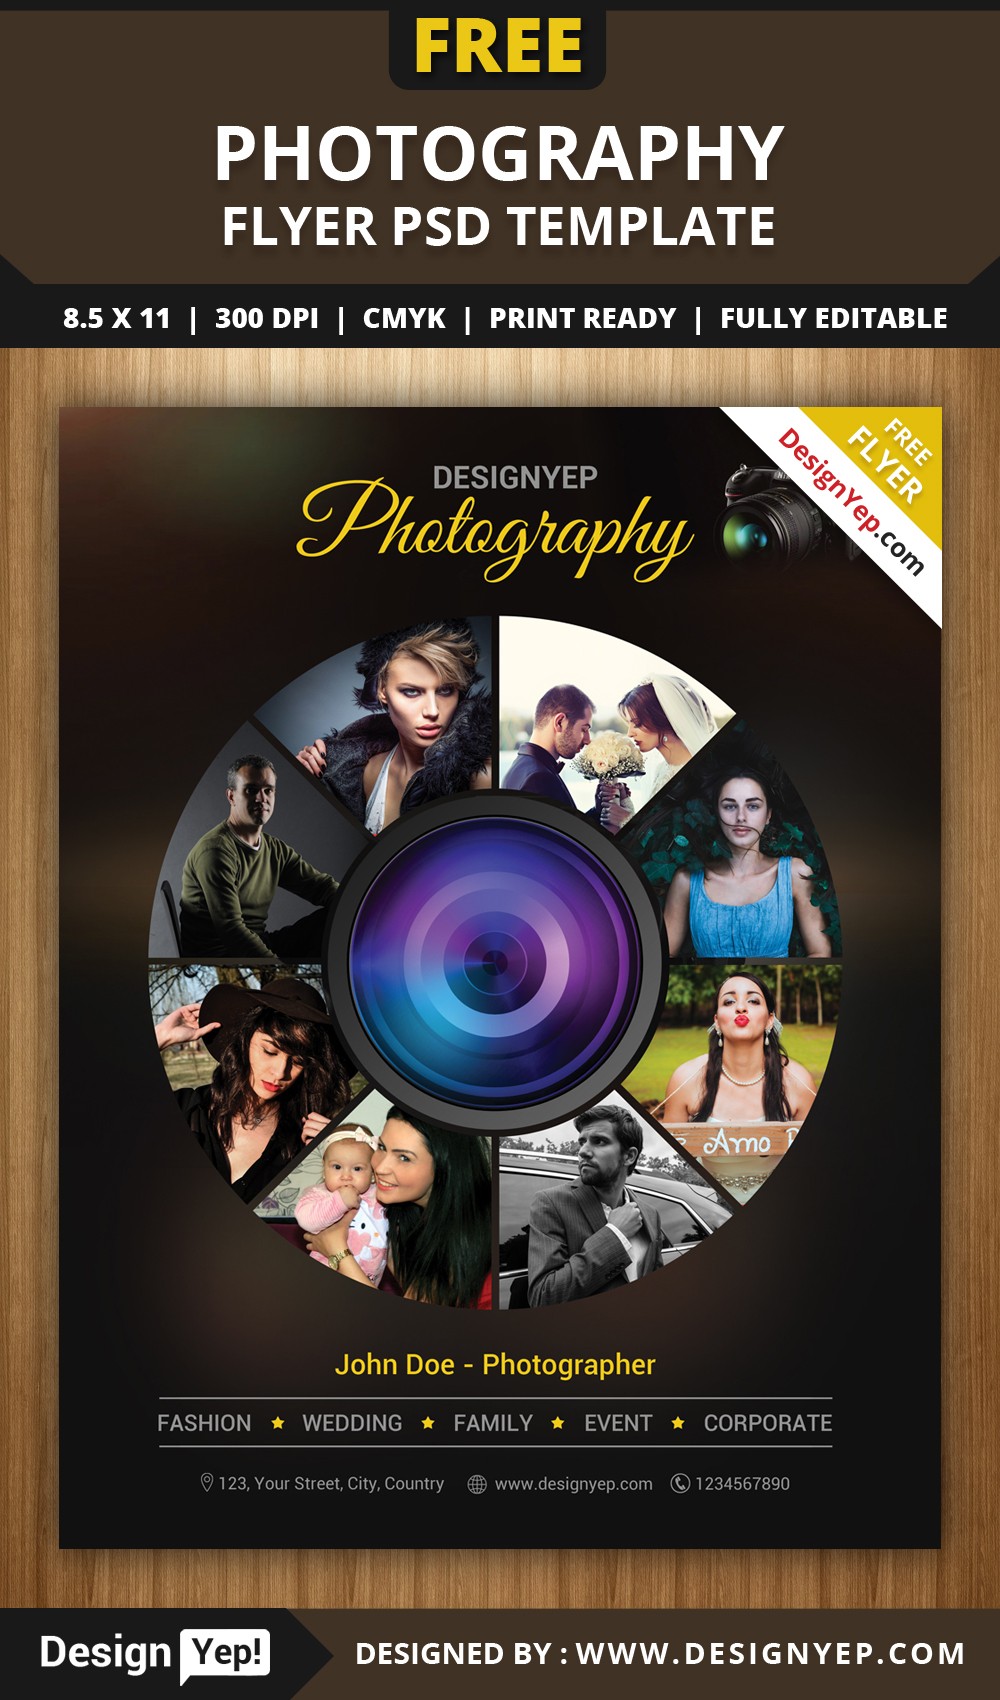 Free Photography Flyer PSD Template DesignYep Psd Templates For